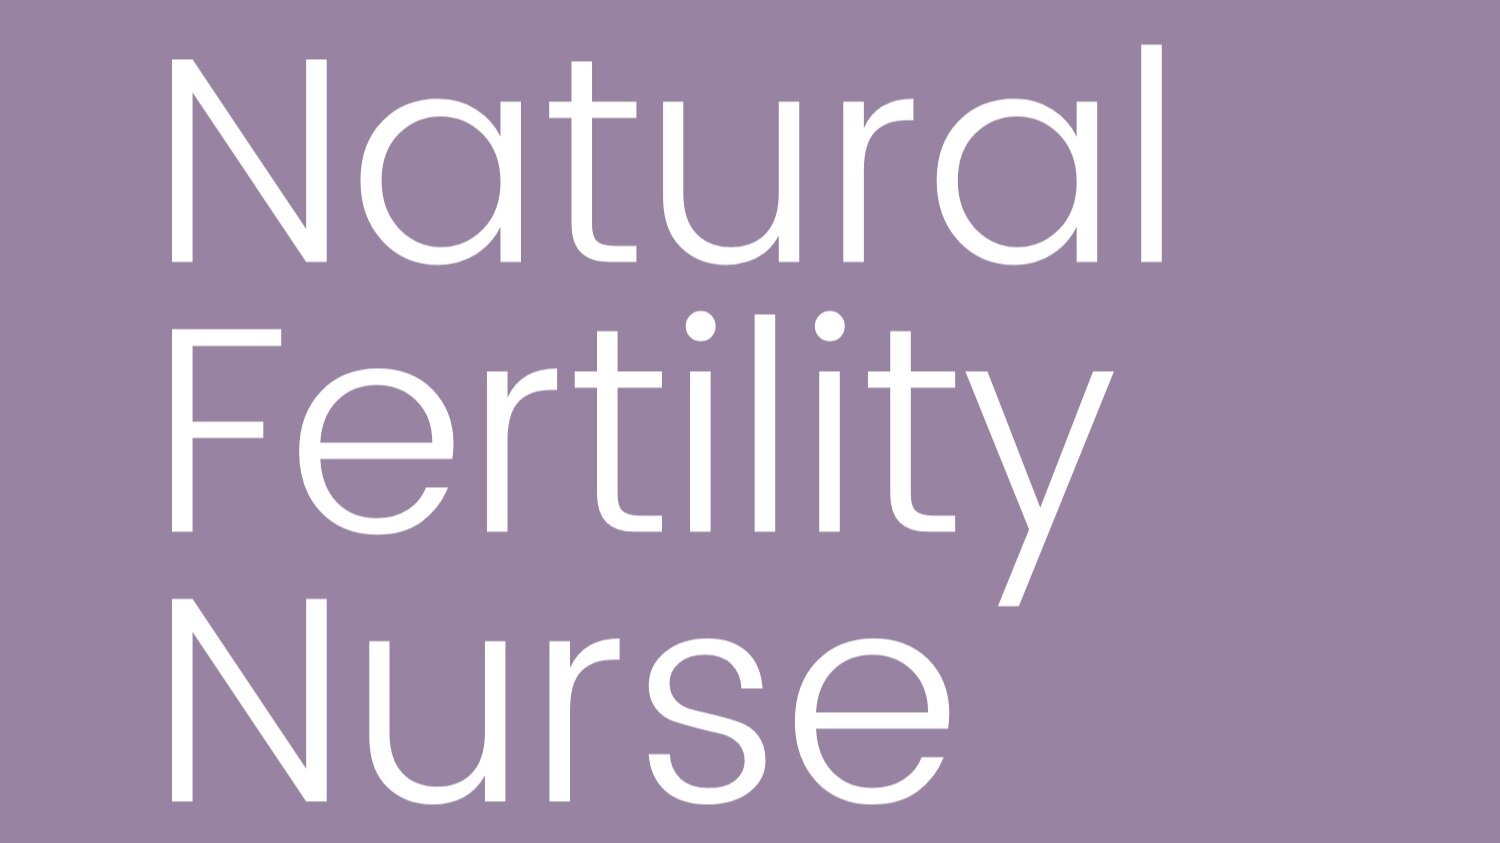 Natural Fertility Nurse